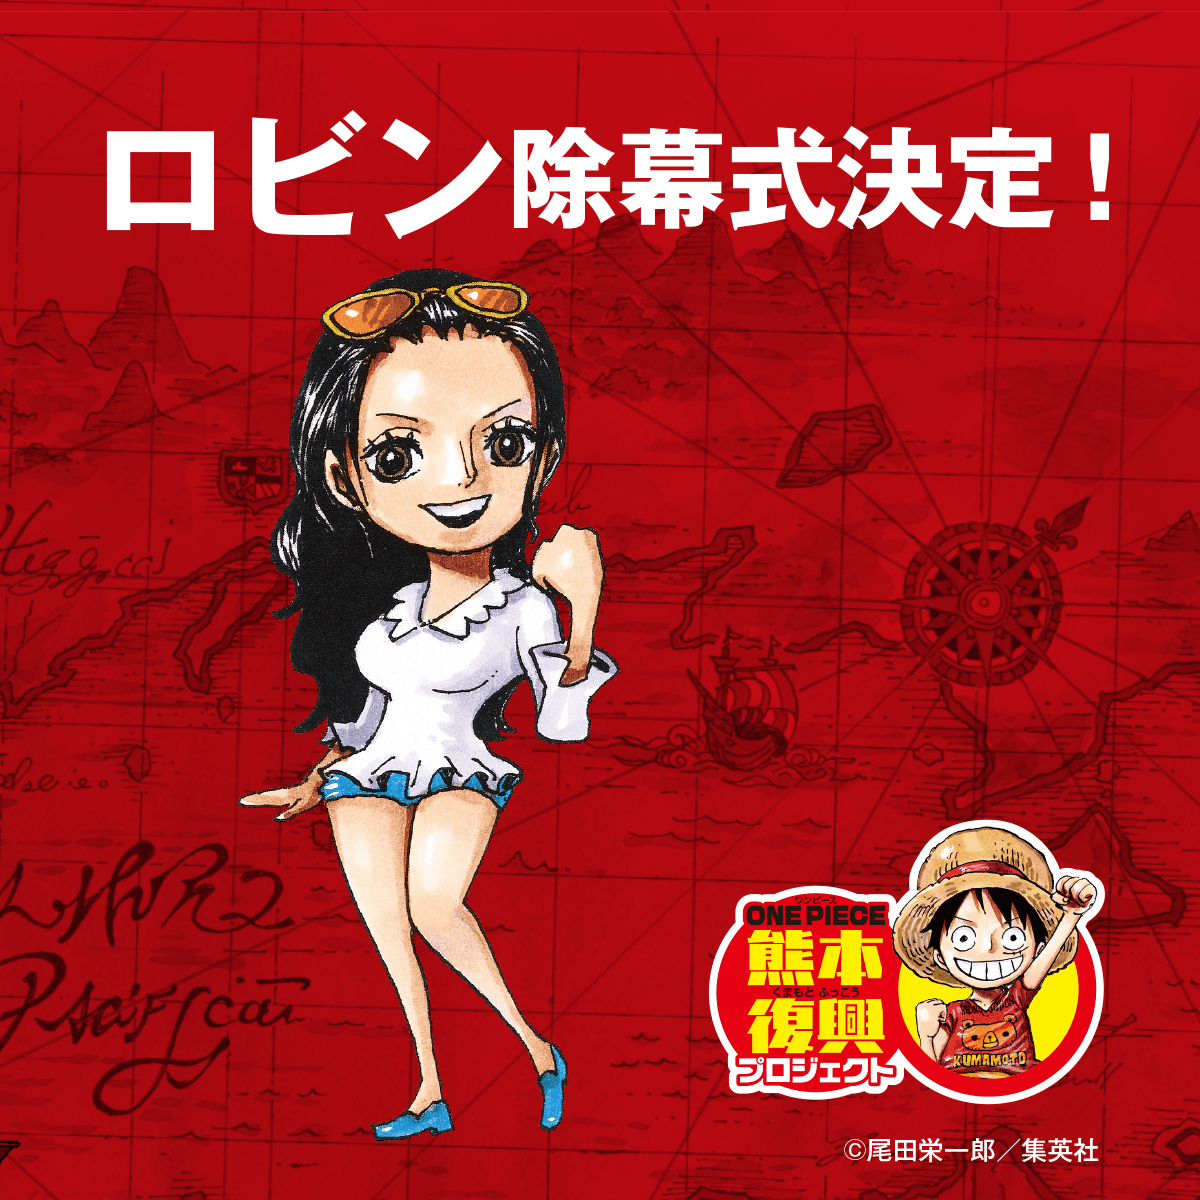 One Piece熊本復興プロジェクト 公式 Op Kfpj Twitter